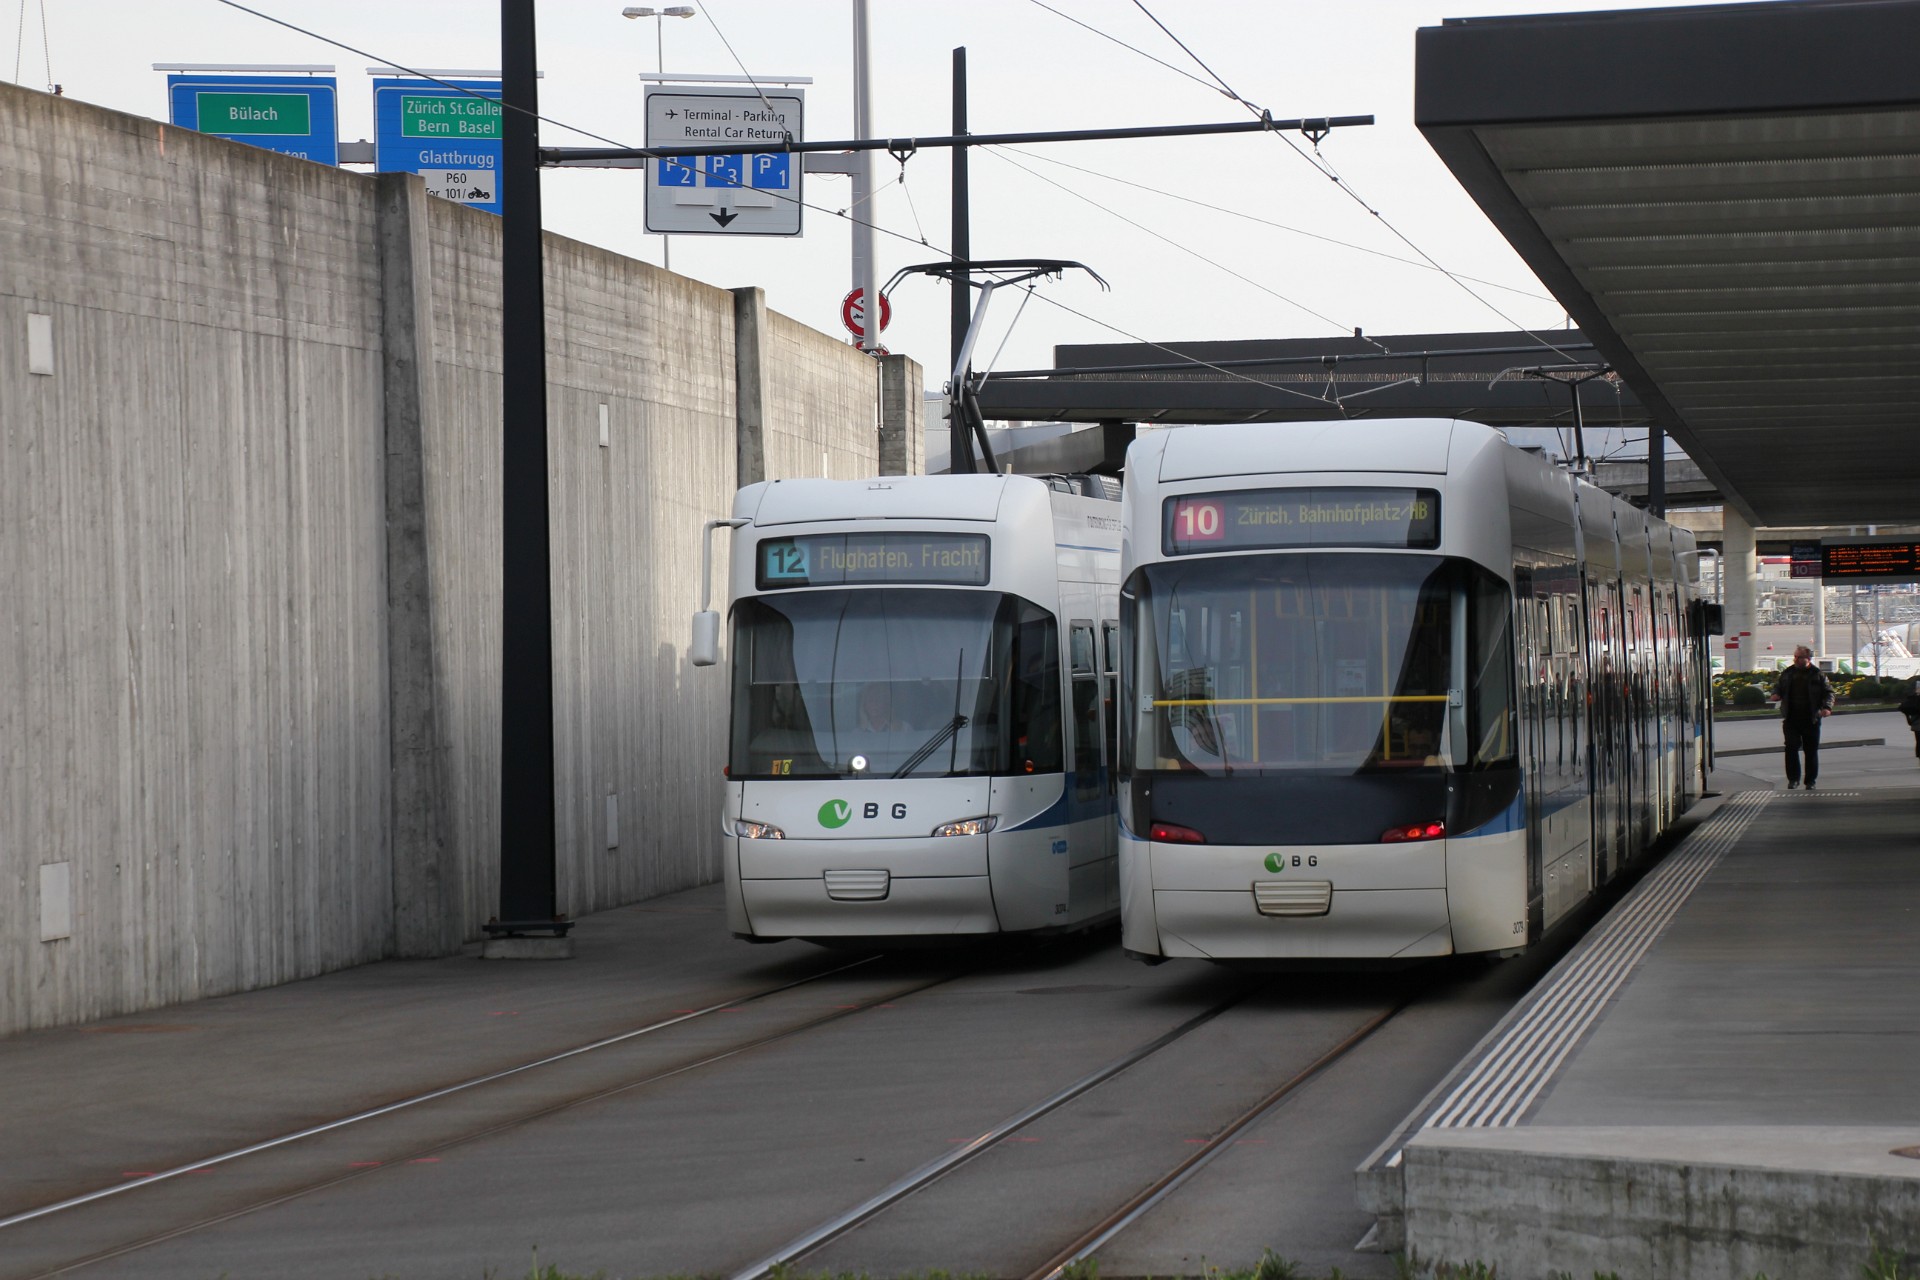 https://public-transport.net/tram/Zurich/Cobra_Glattalbahn/slides/8928_64.JPG